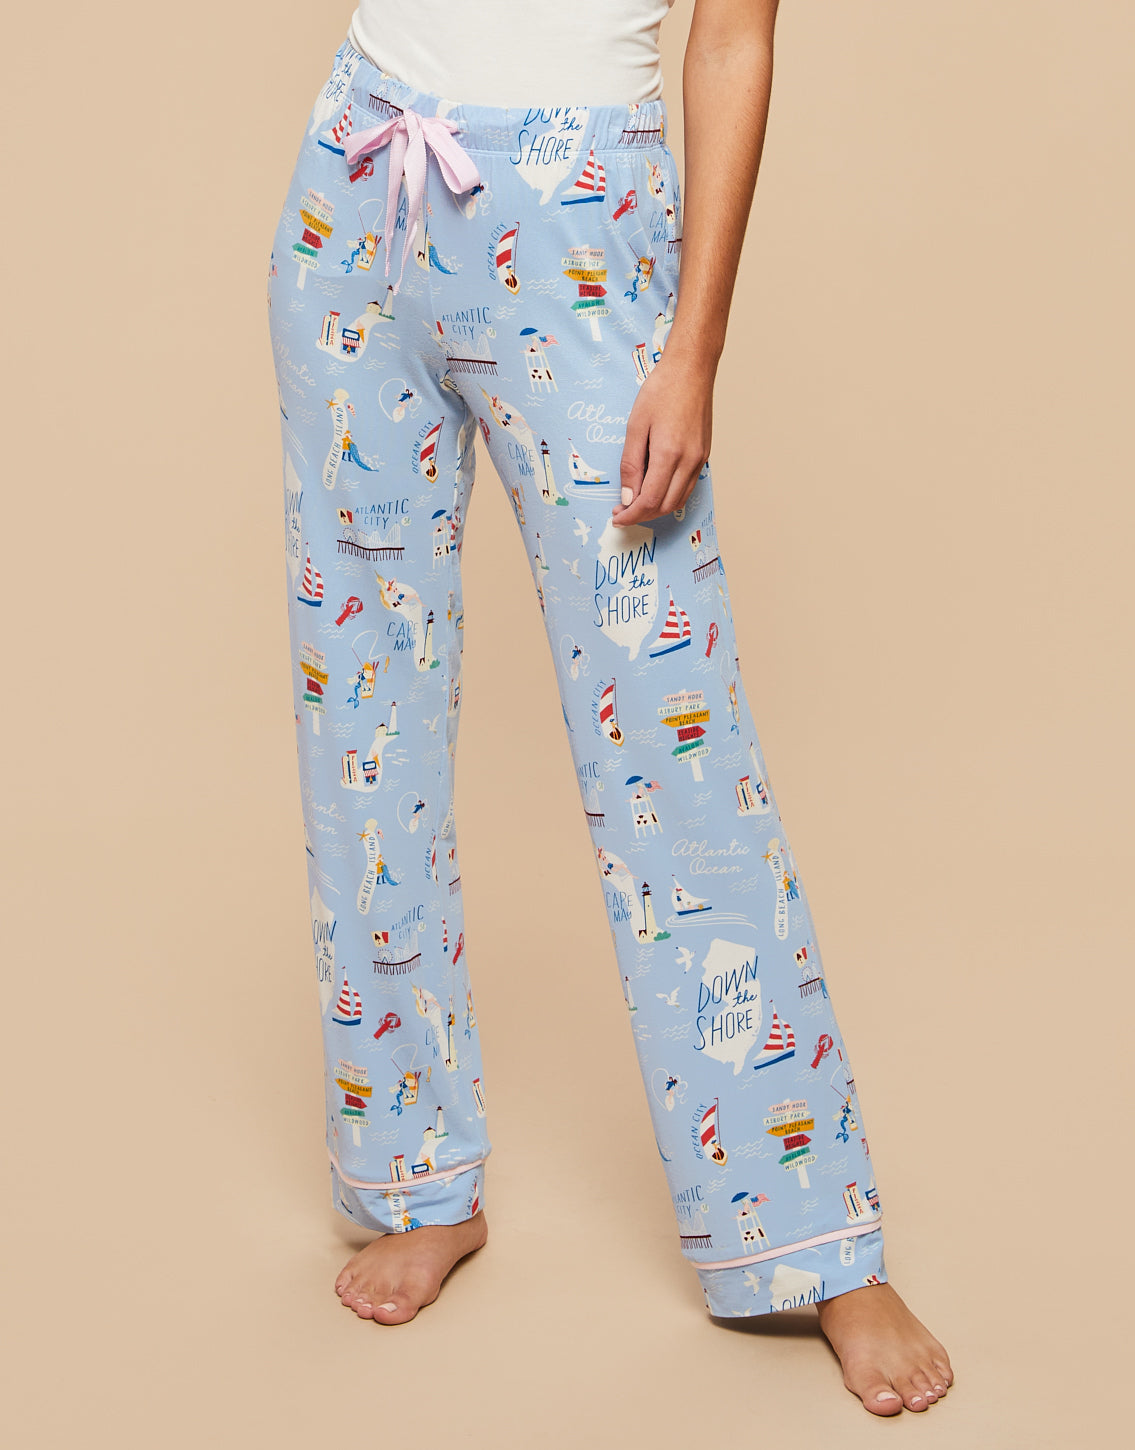 Down the Shore Pajama Pant